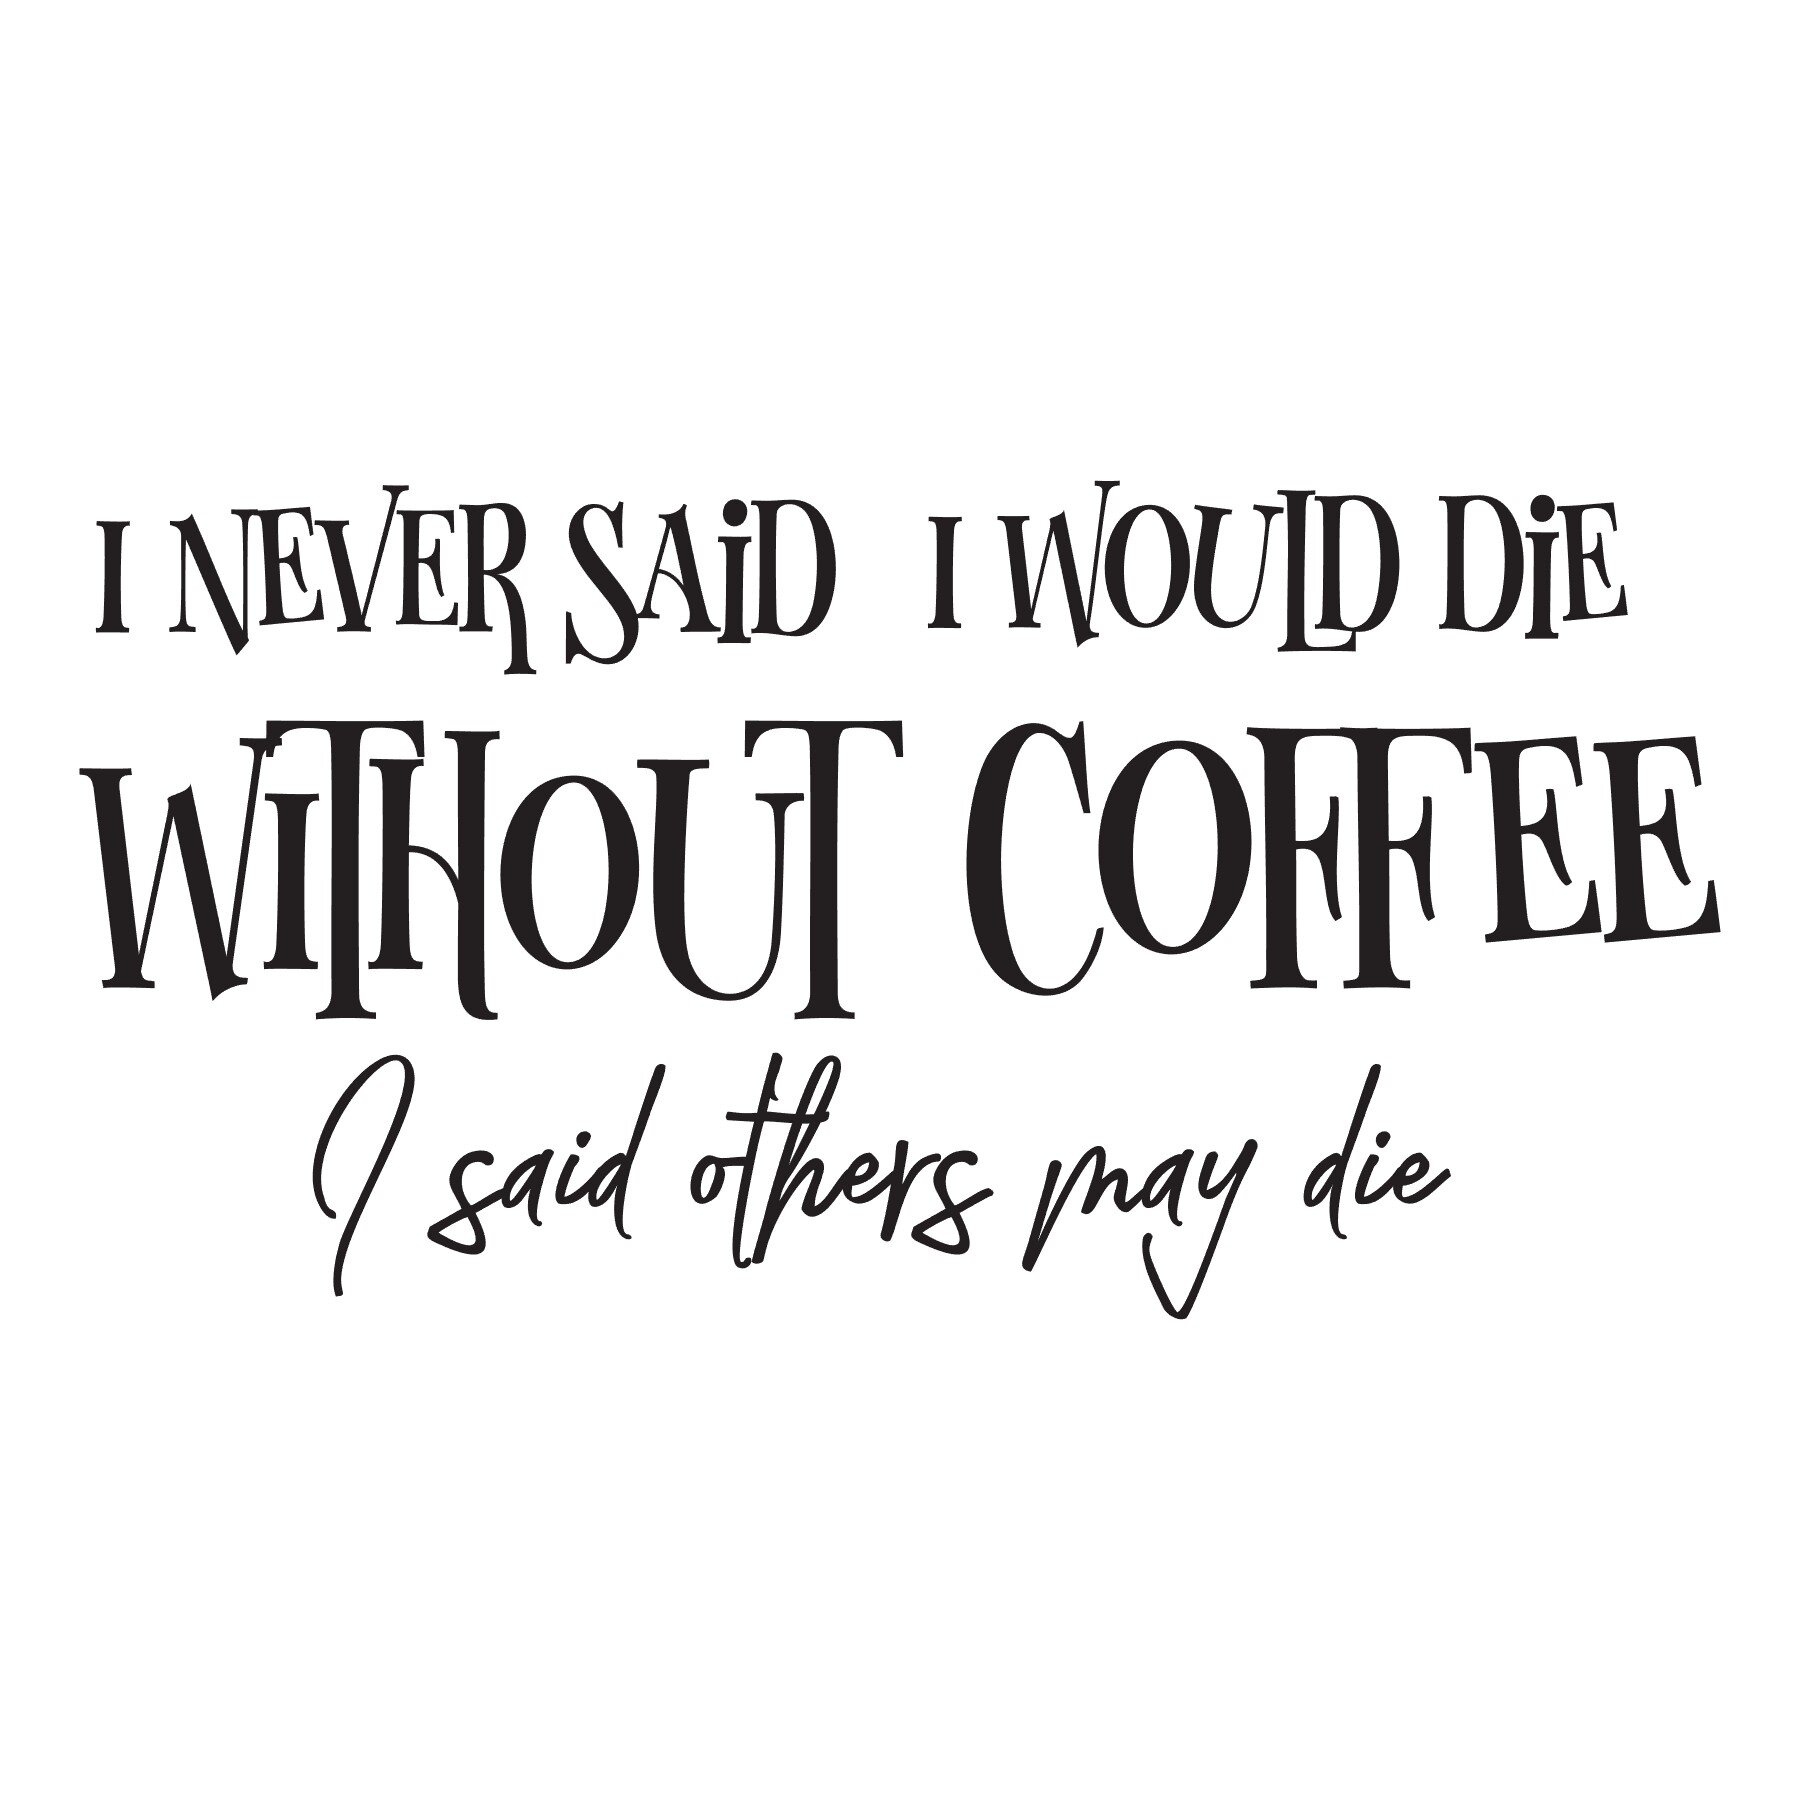 die without coffee.jpg